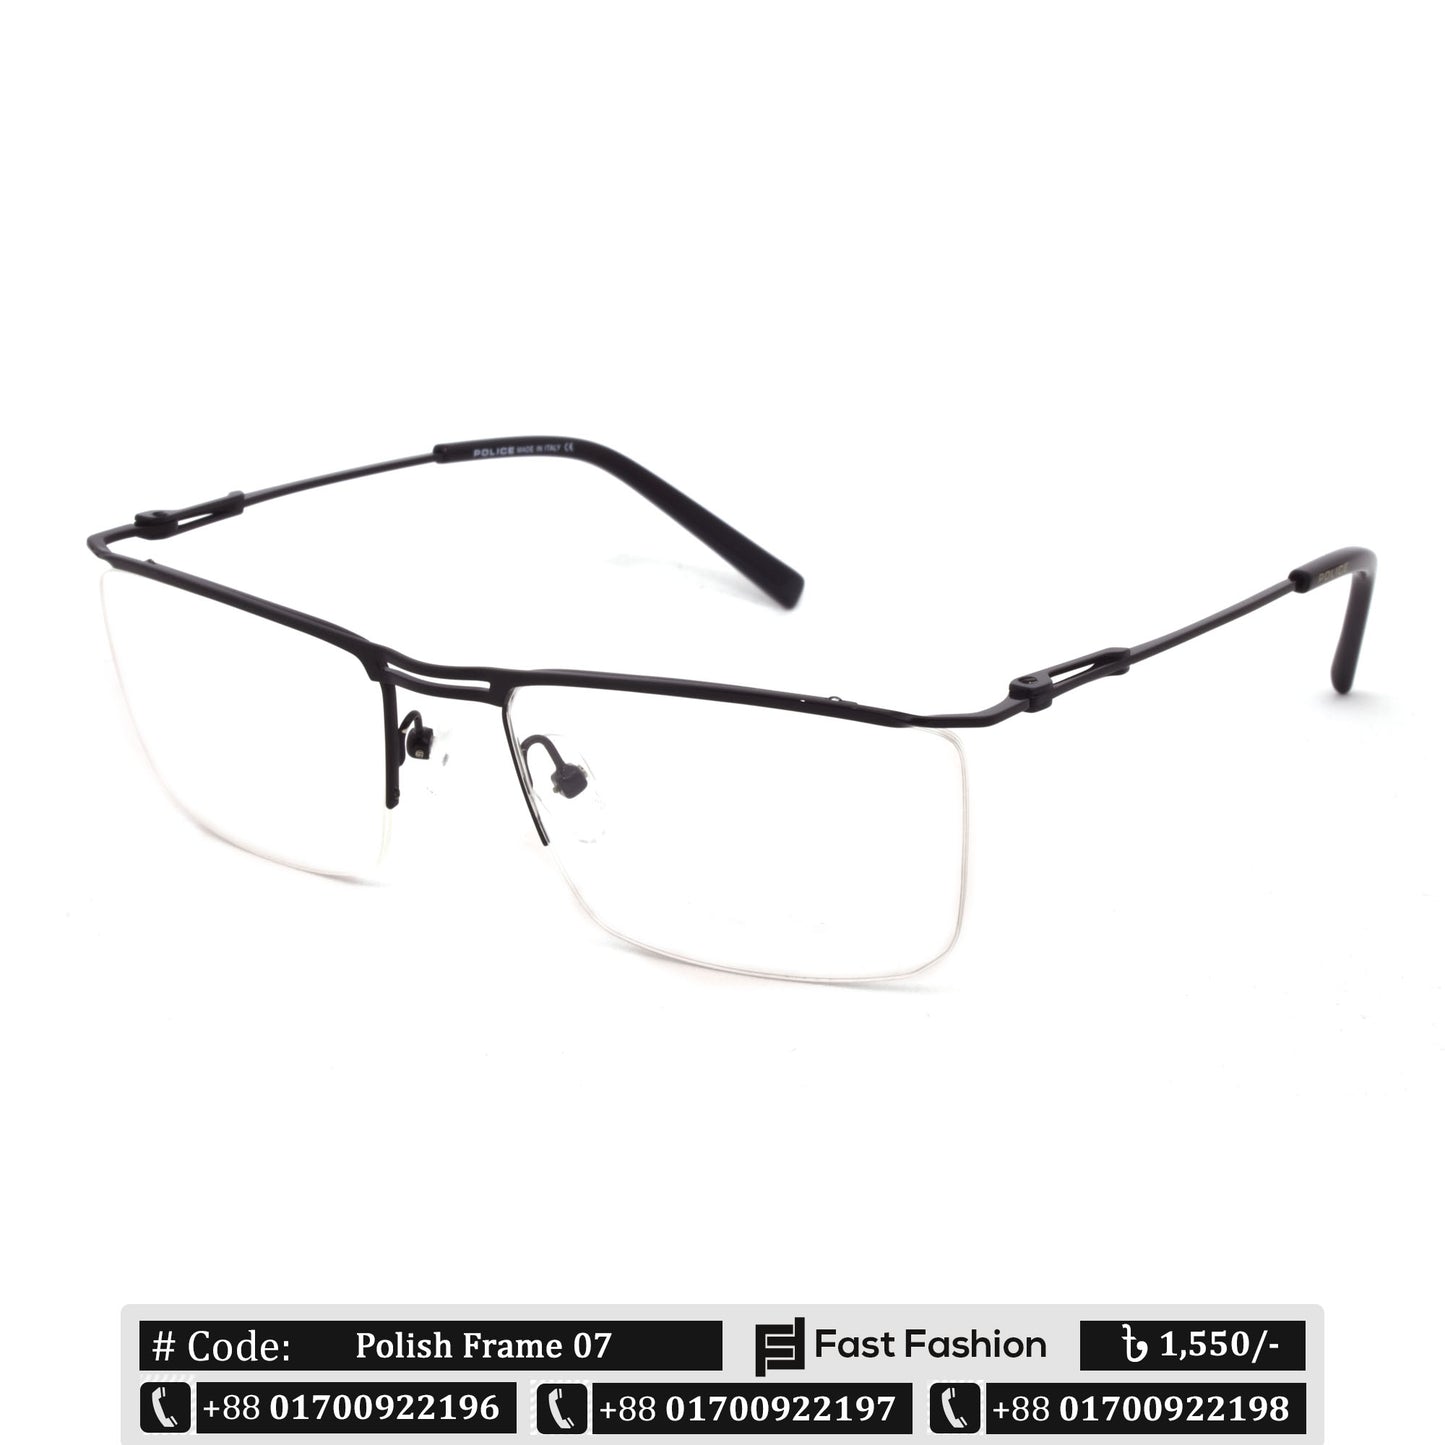 Trendy Stylish Optic Frame | Polish Frame 07 | Premium Quality